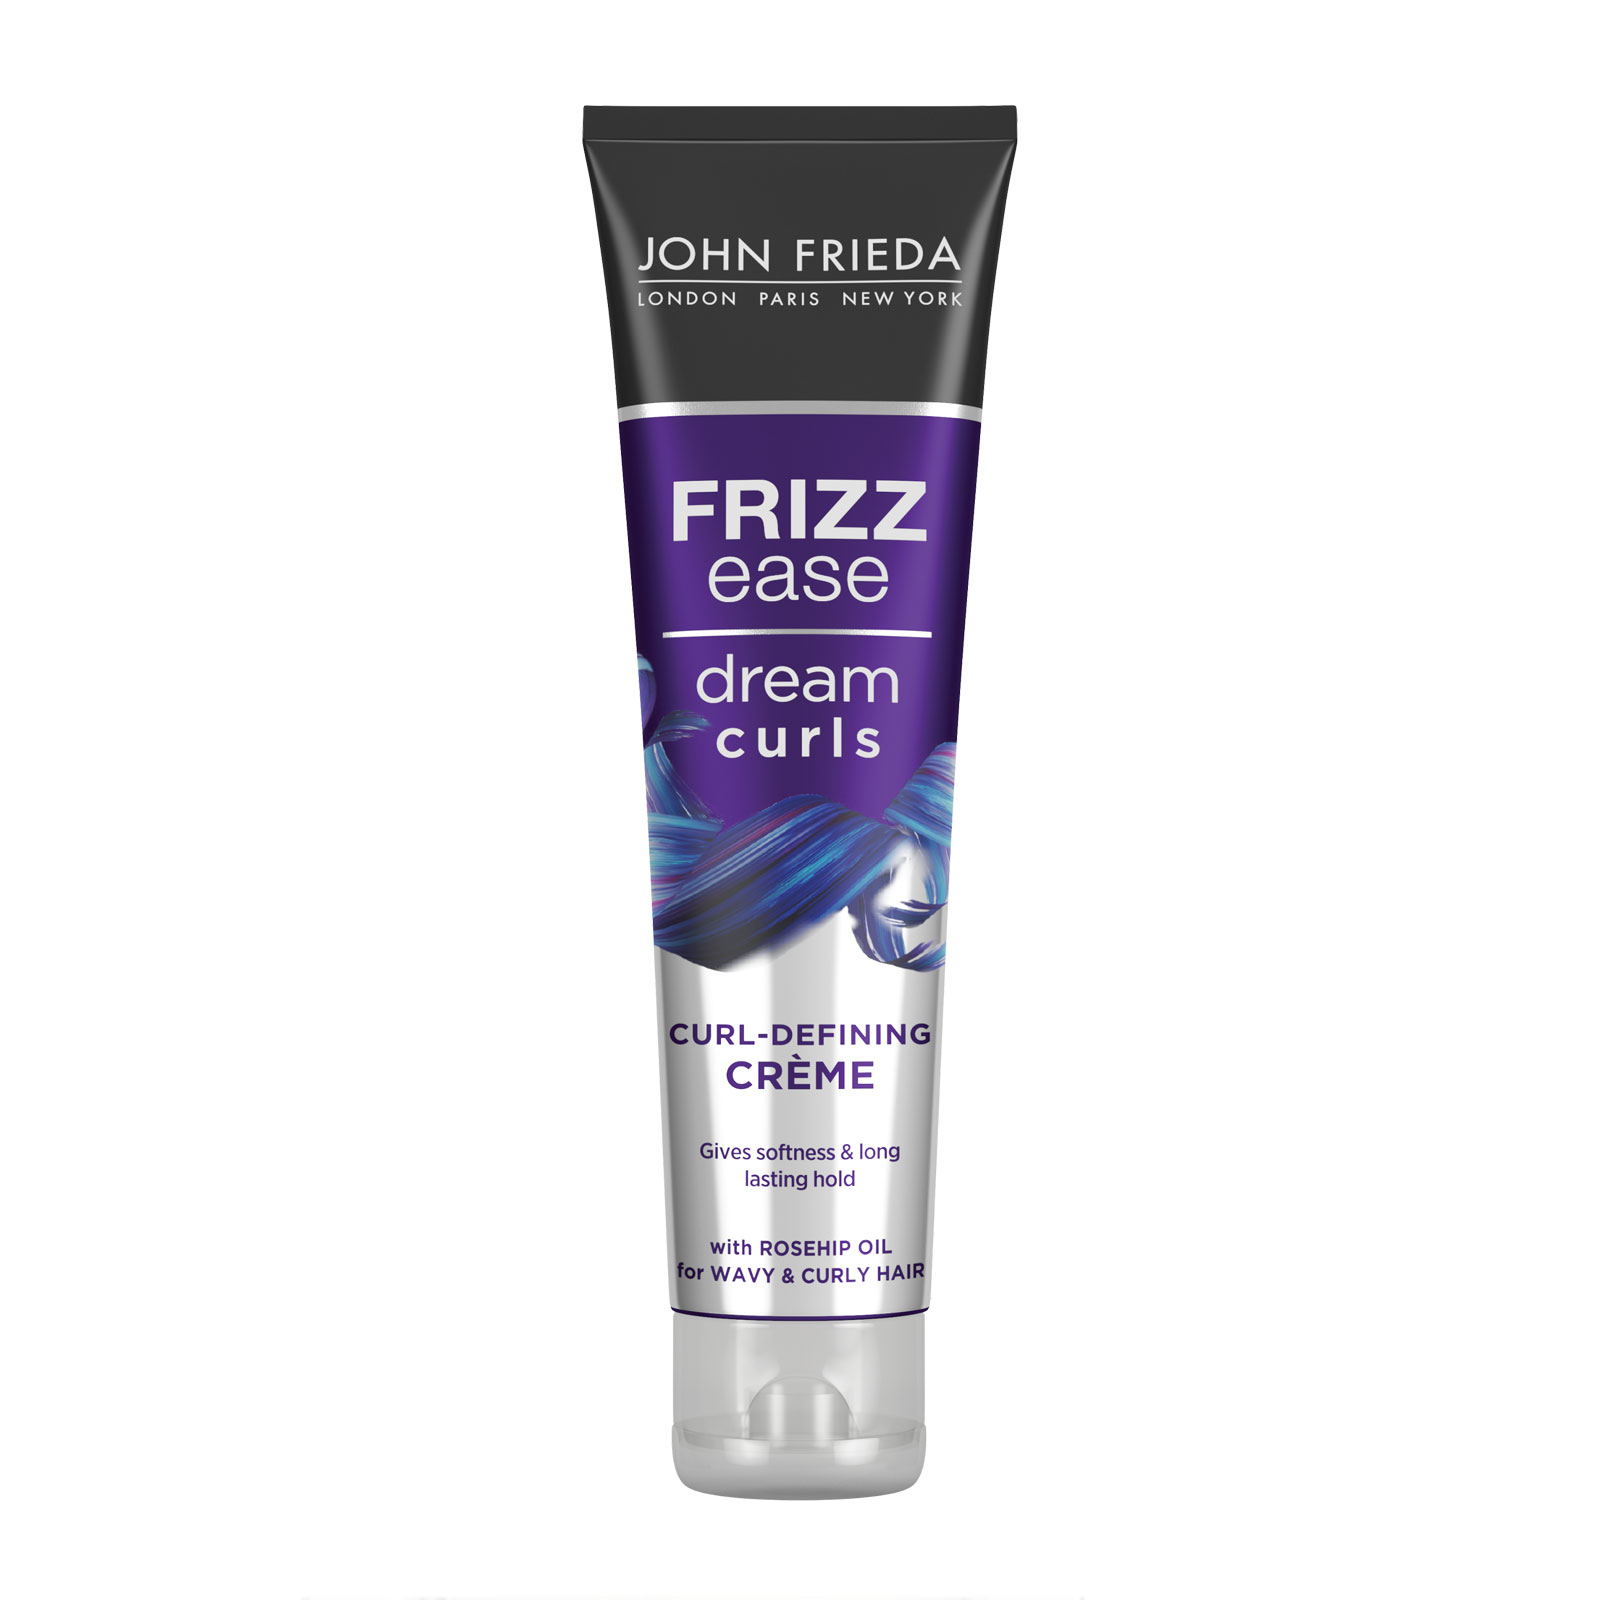 John frieda frizz ease dream curls crème...